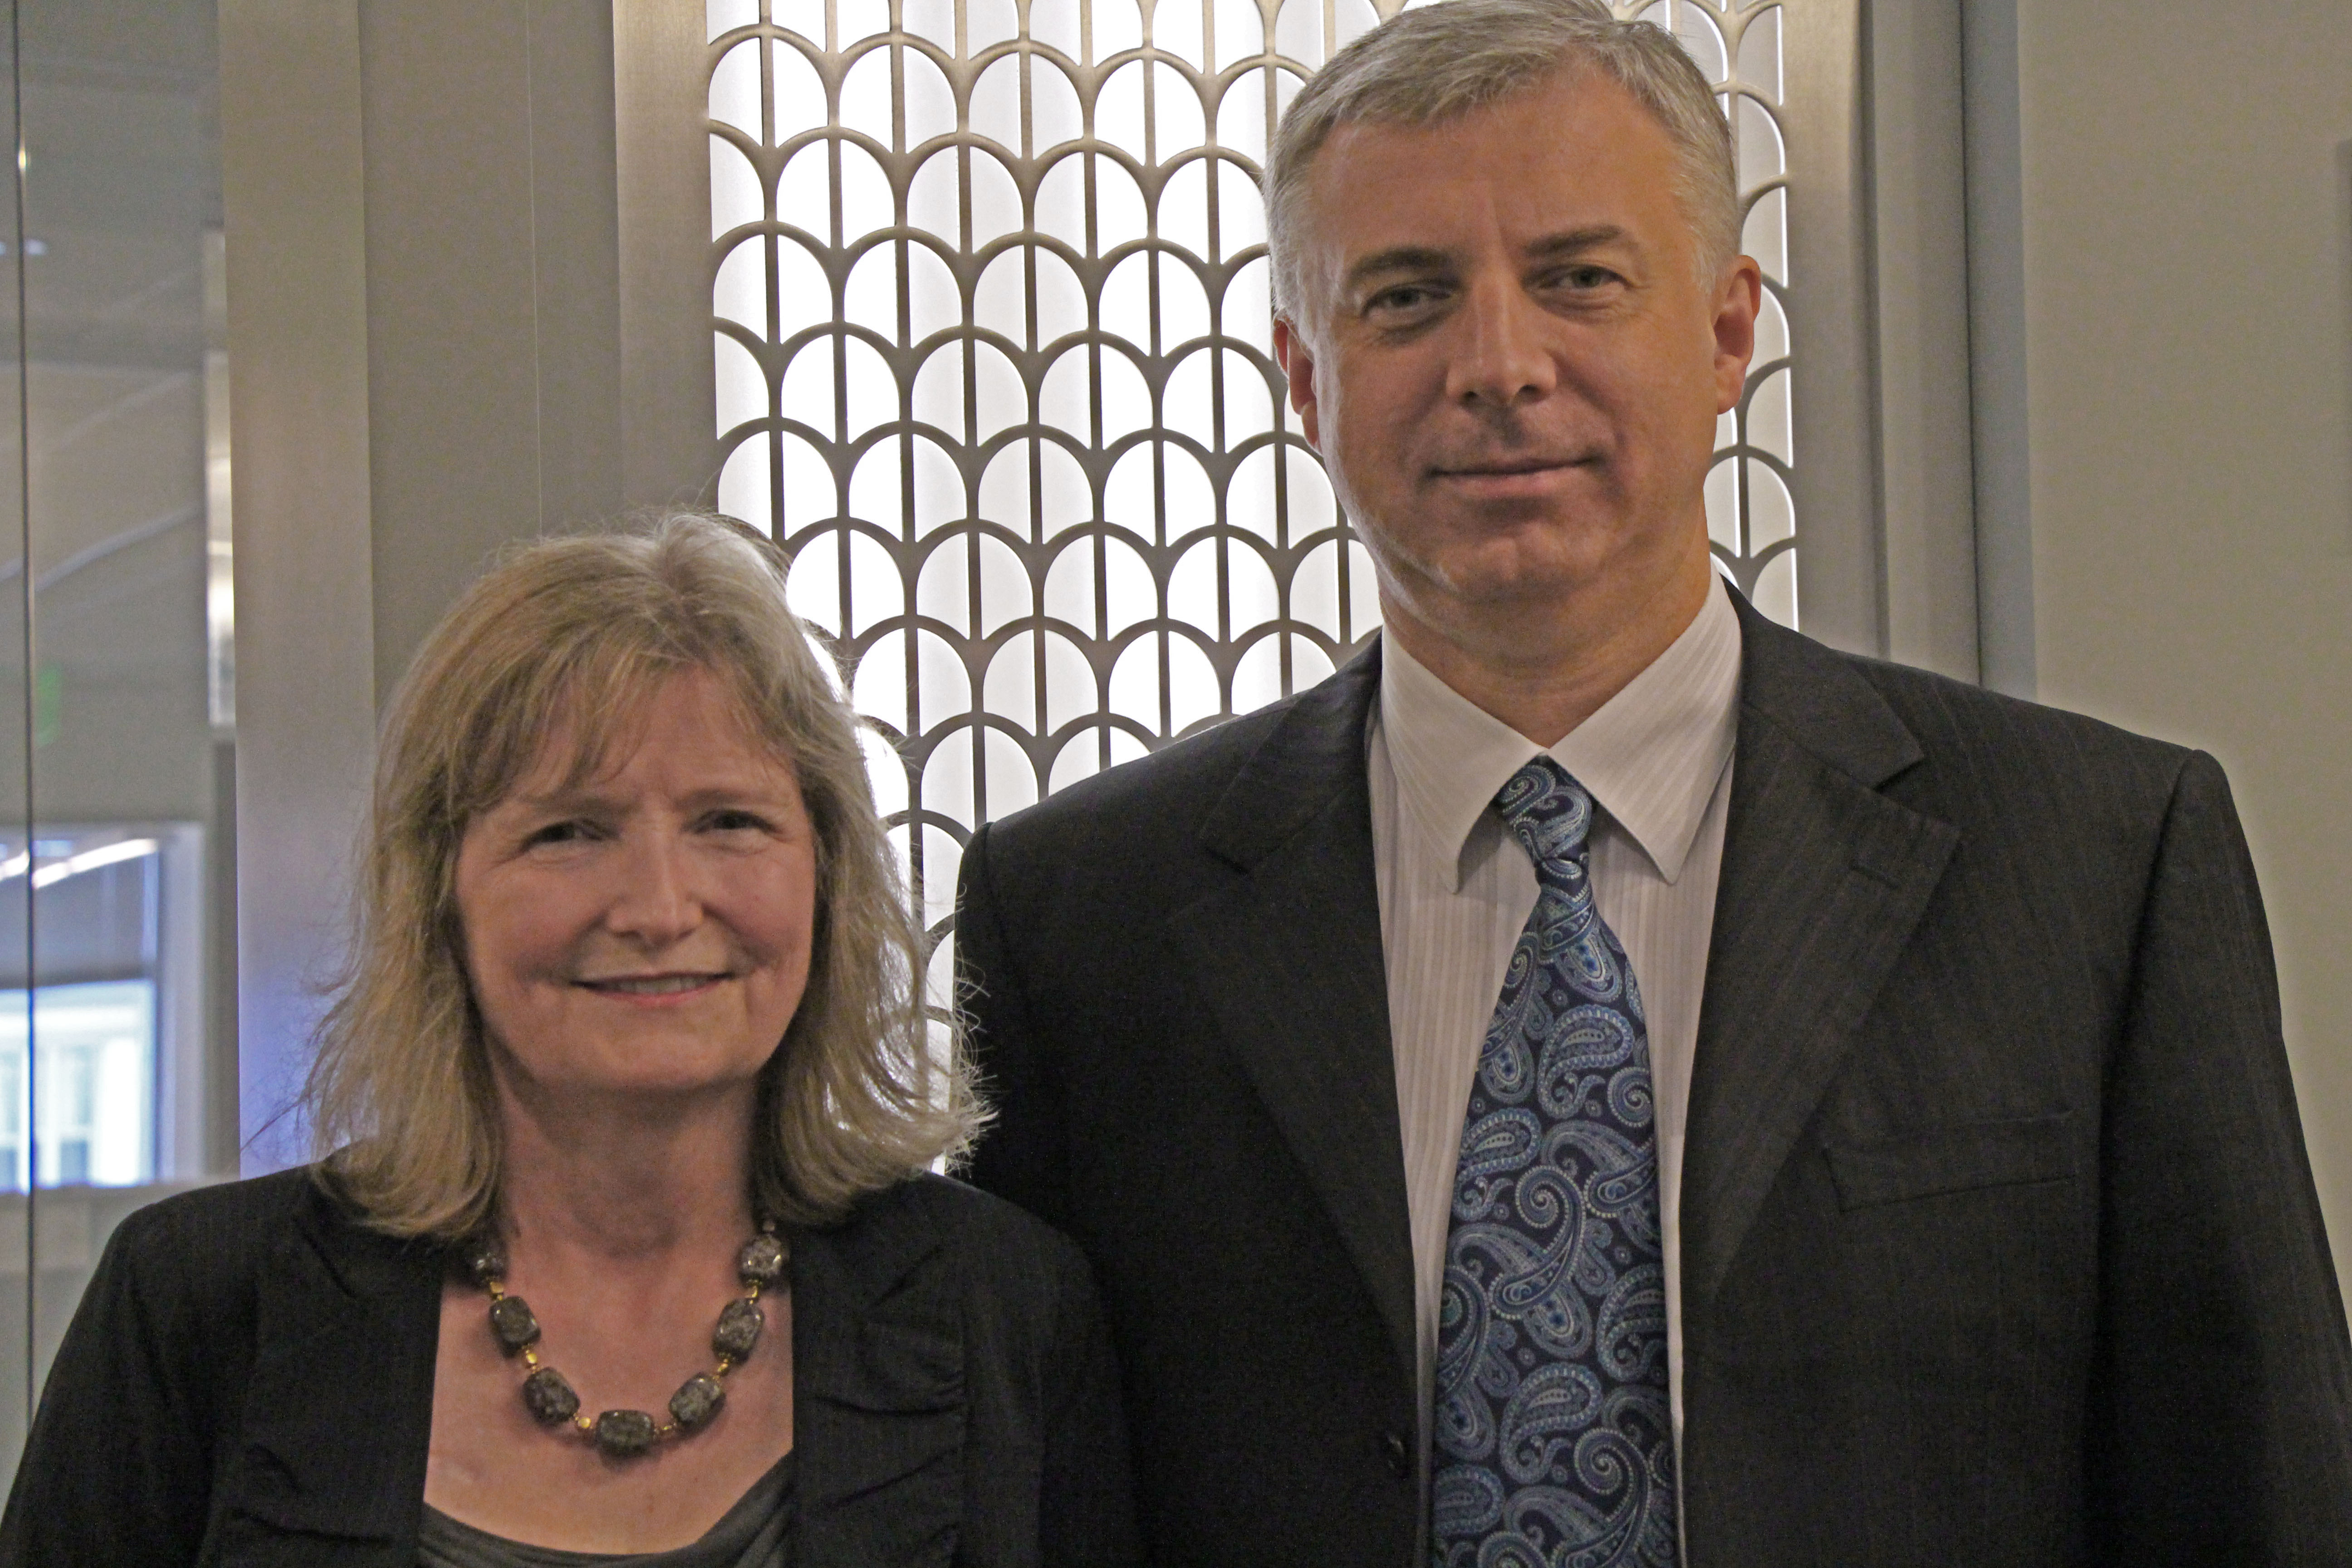 Marilyn Pifer, CRDF Global's Director of Capacity Building with Minister Kvit at CRDF Global headquarters in Arlington, VA